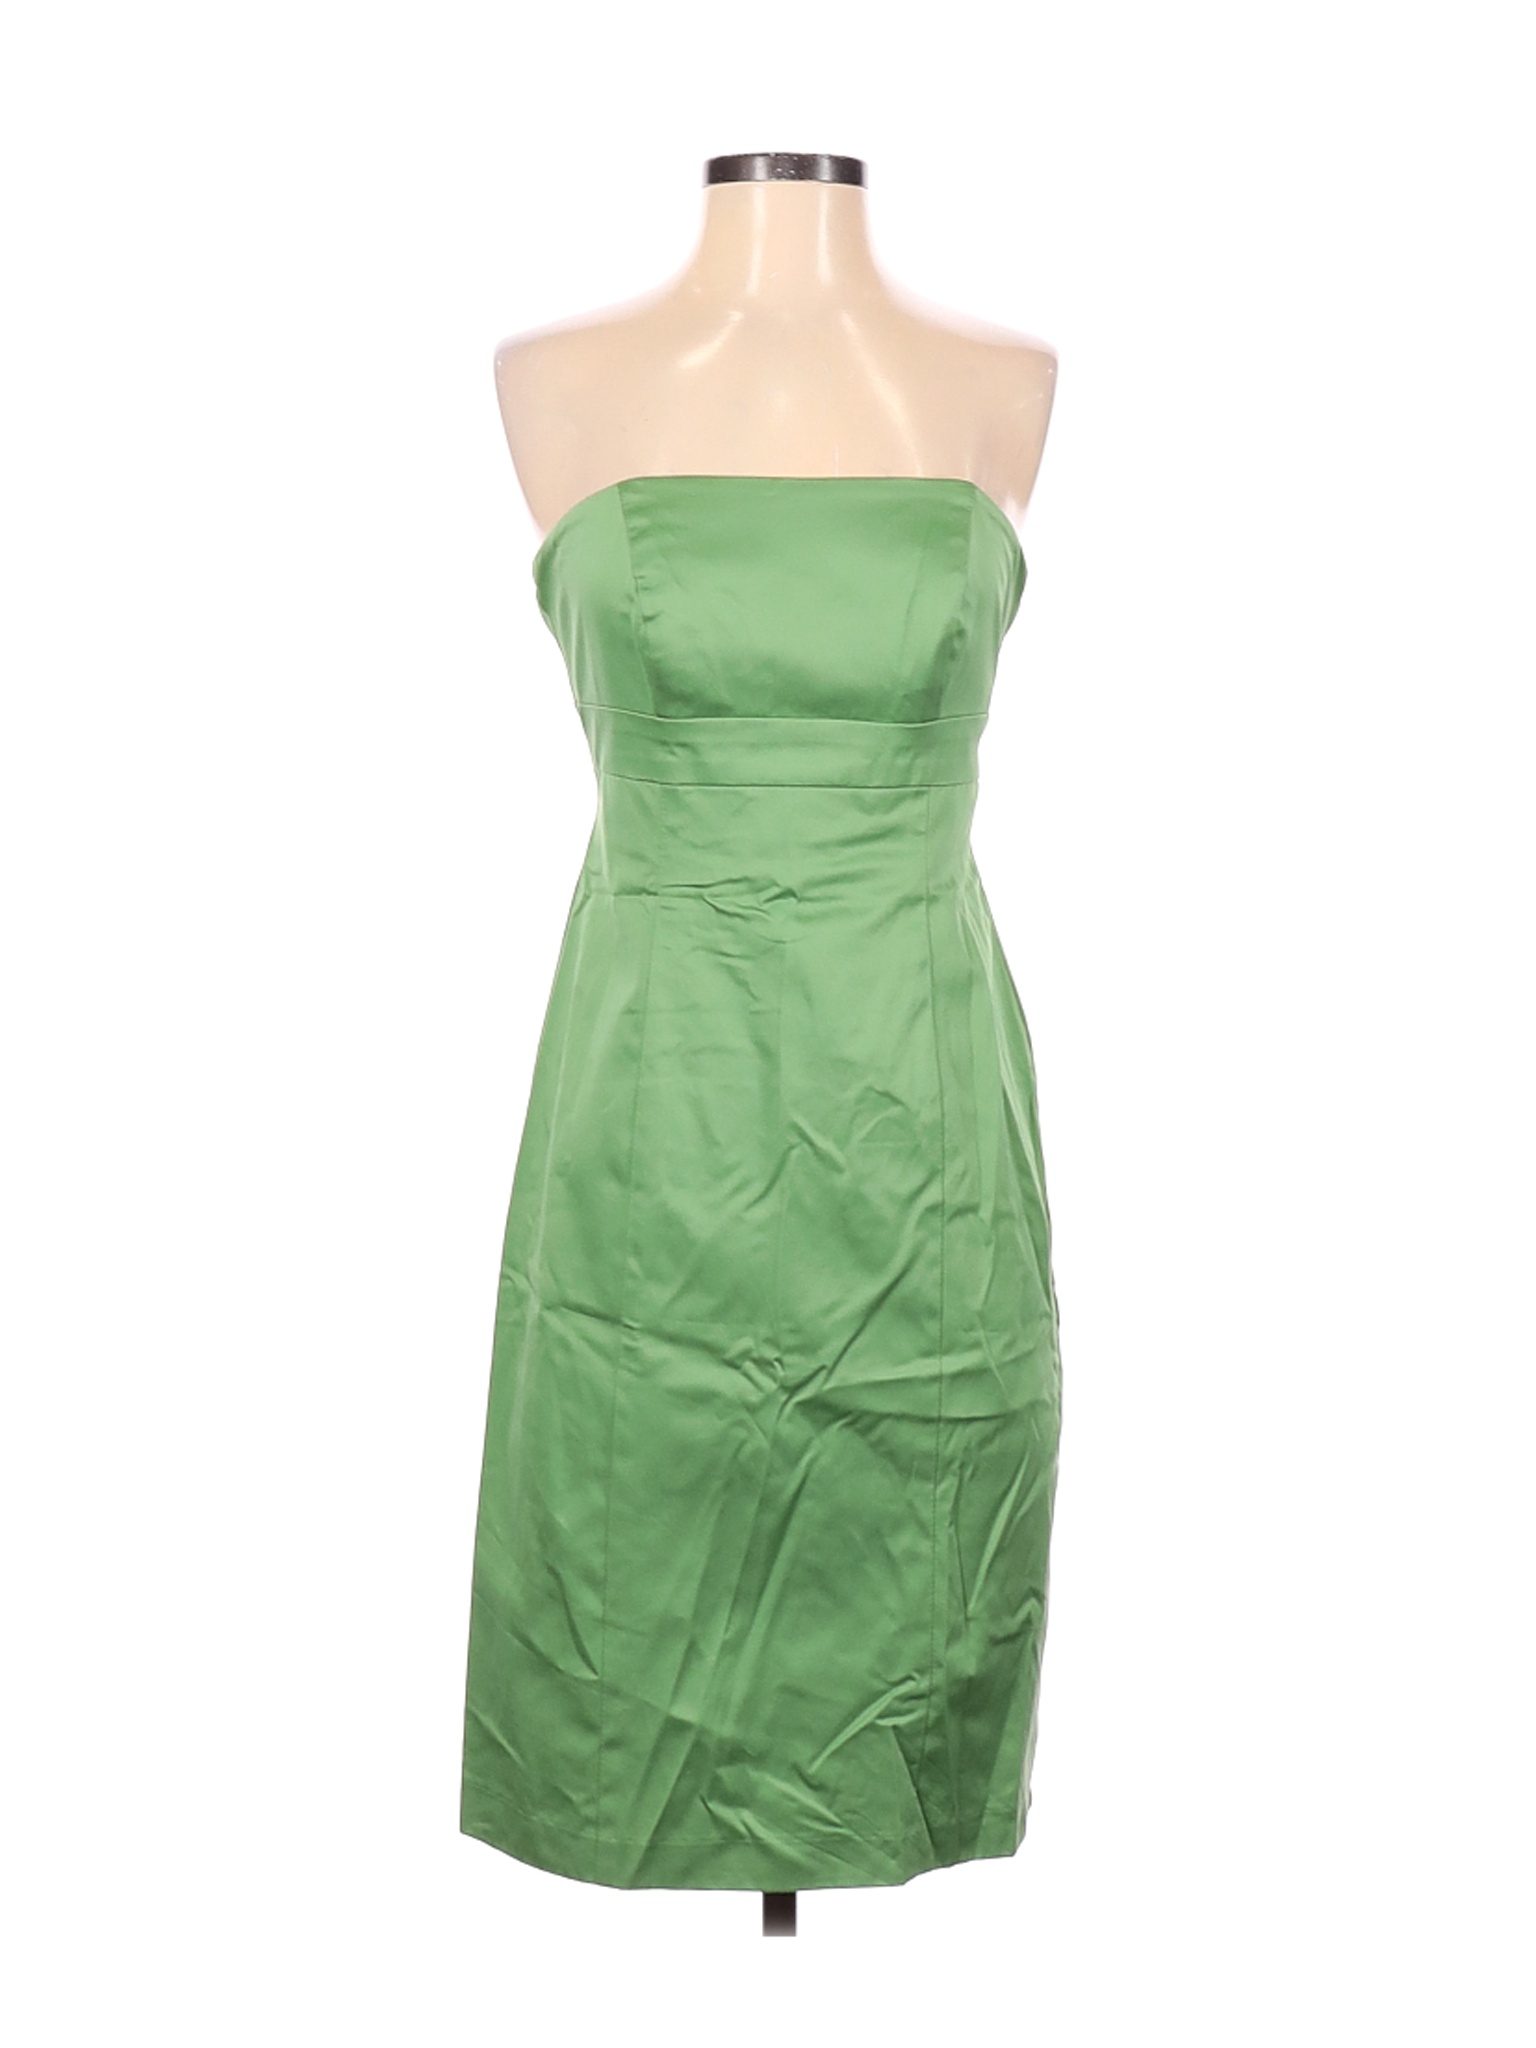 David's Bridal Women Green Cocktail Dress 2 | eBay